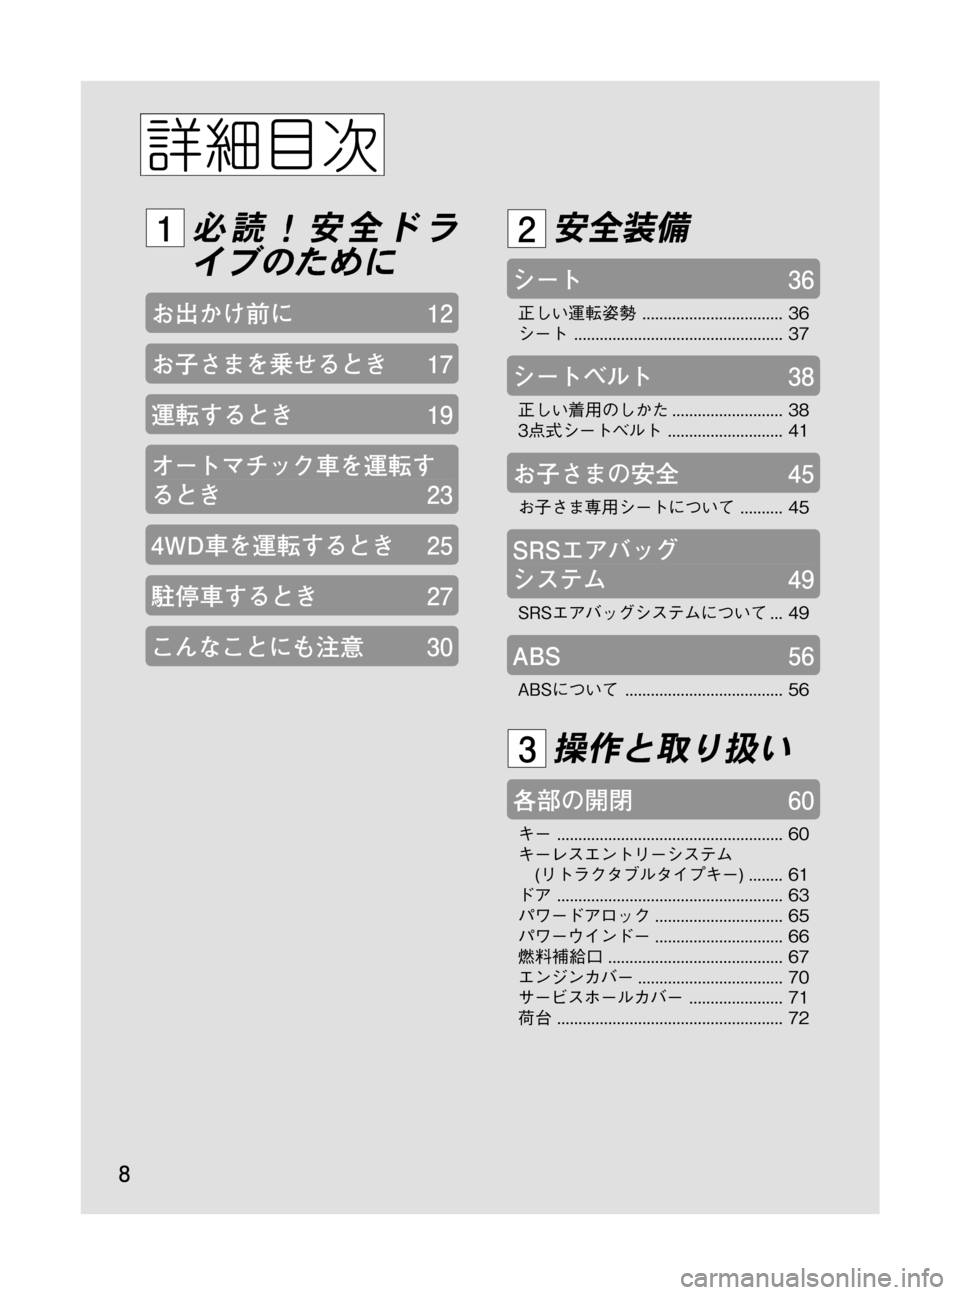 MAZDA MODEL BONGO TRACK 2016  取扱説明書 (in Japanese) Black plate (8,1)
必読！安全ドラ
イブのために
お出かけ前に12
お子さまを乗せるとき17
運転するとき19
オートマチック車を運転す
るとき23
4WD車を運転�